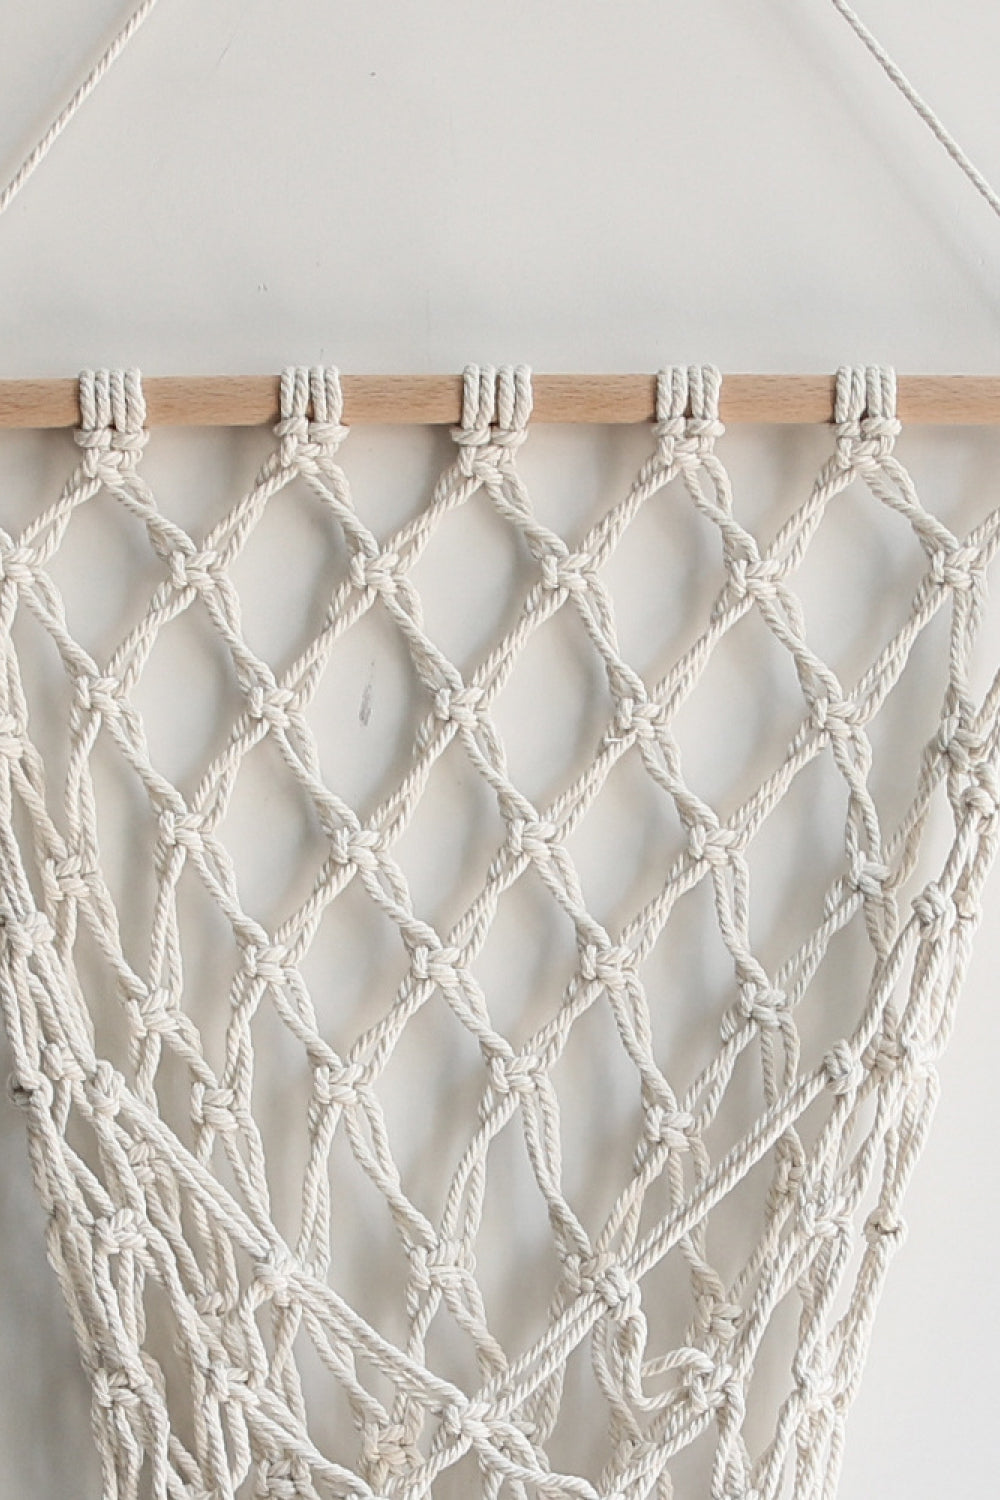 Macrame Basket Wall Hanging The Stout Steer